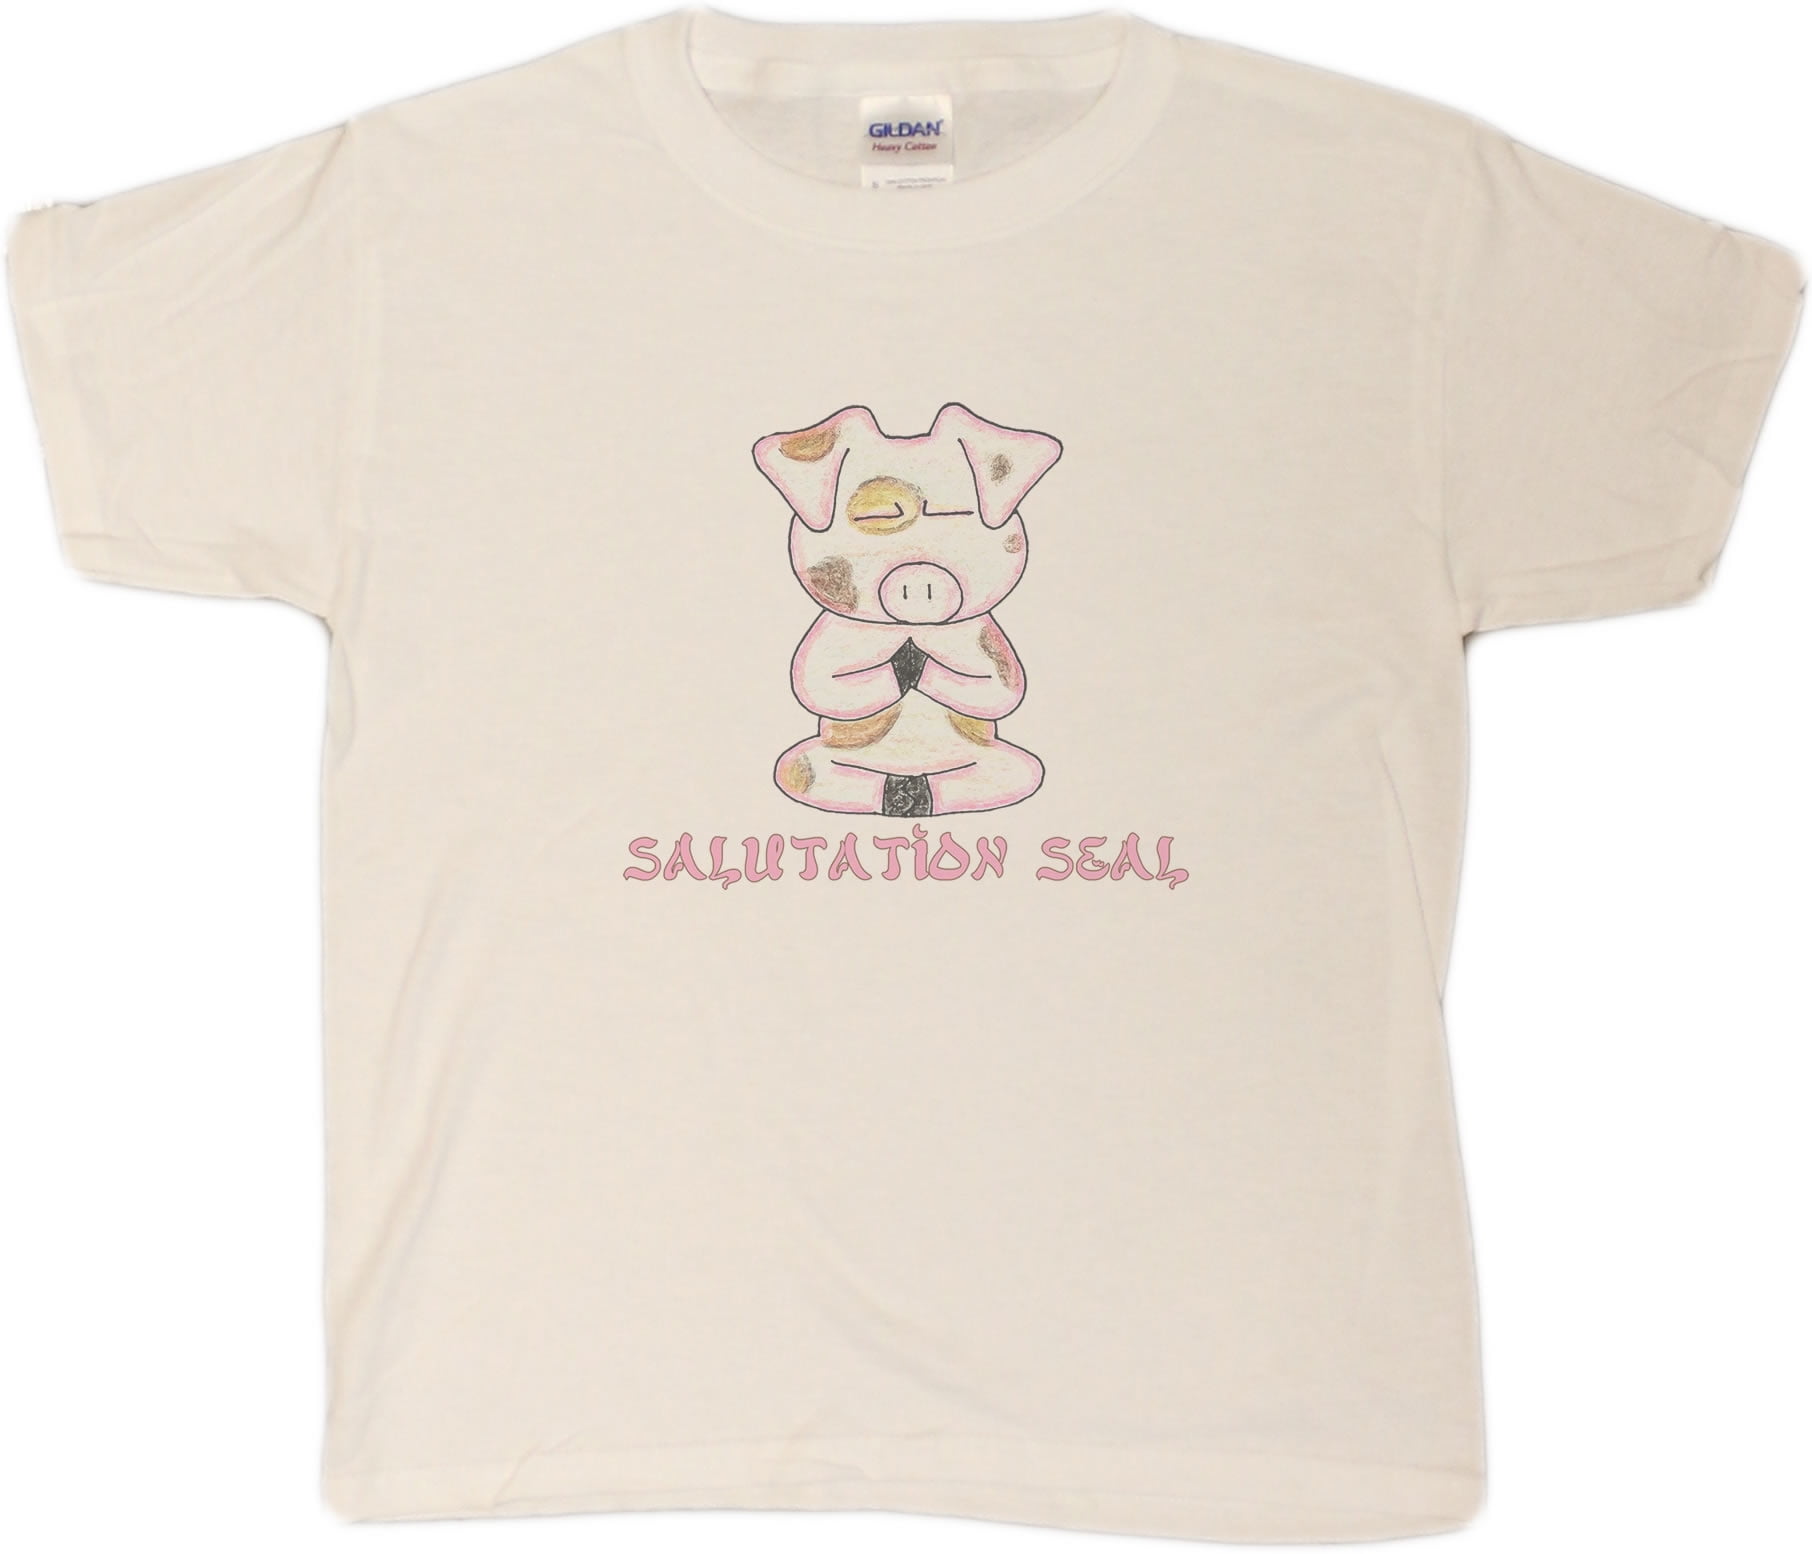 Unisex-Big Kids 4-20 Youth (6/8)) (Ash, Small Piggy Yoga Salutation Youth T-Shirt Seal